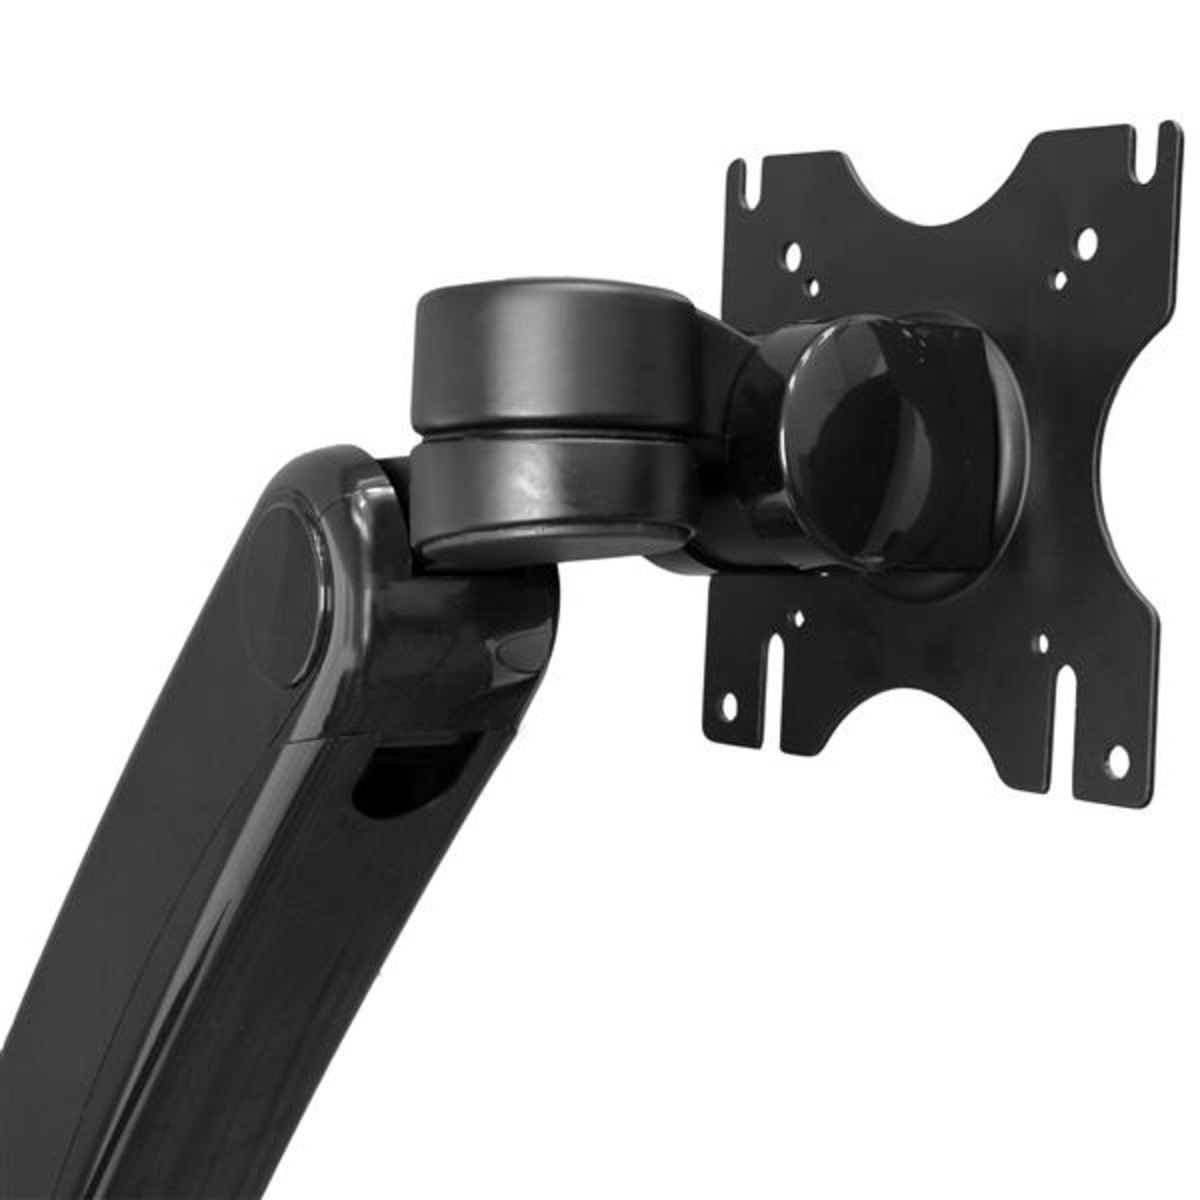 Single-Monitor Arm - Wallmount